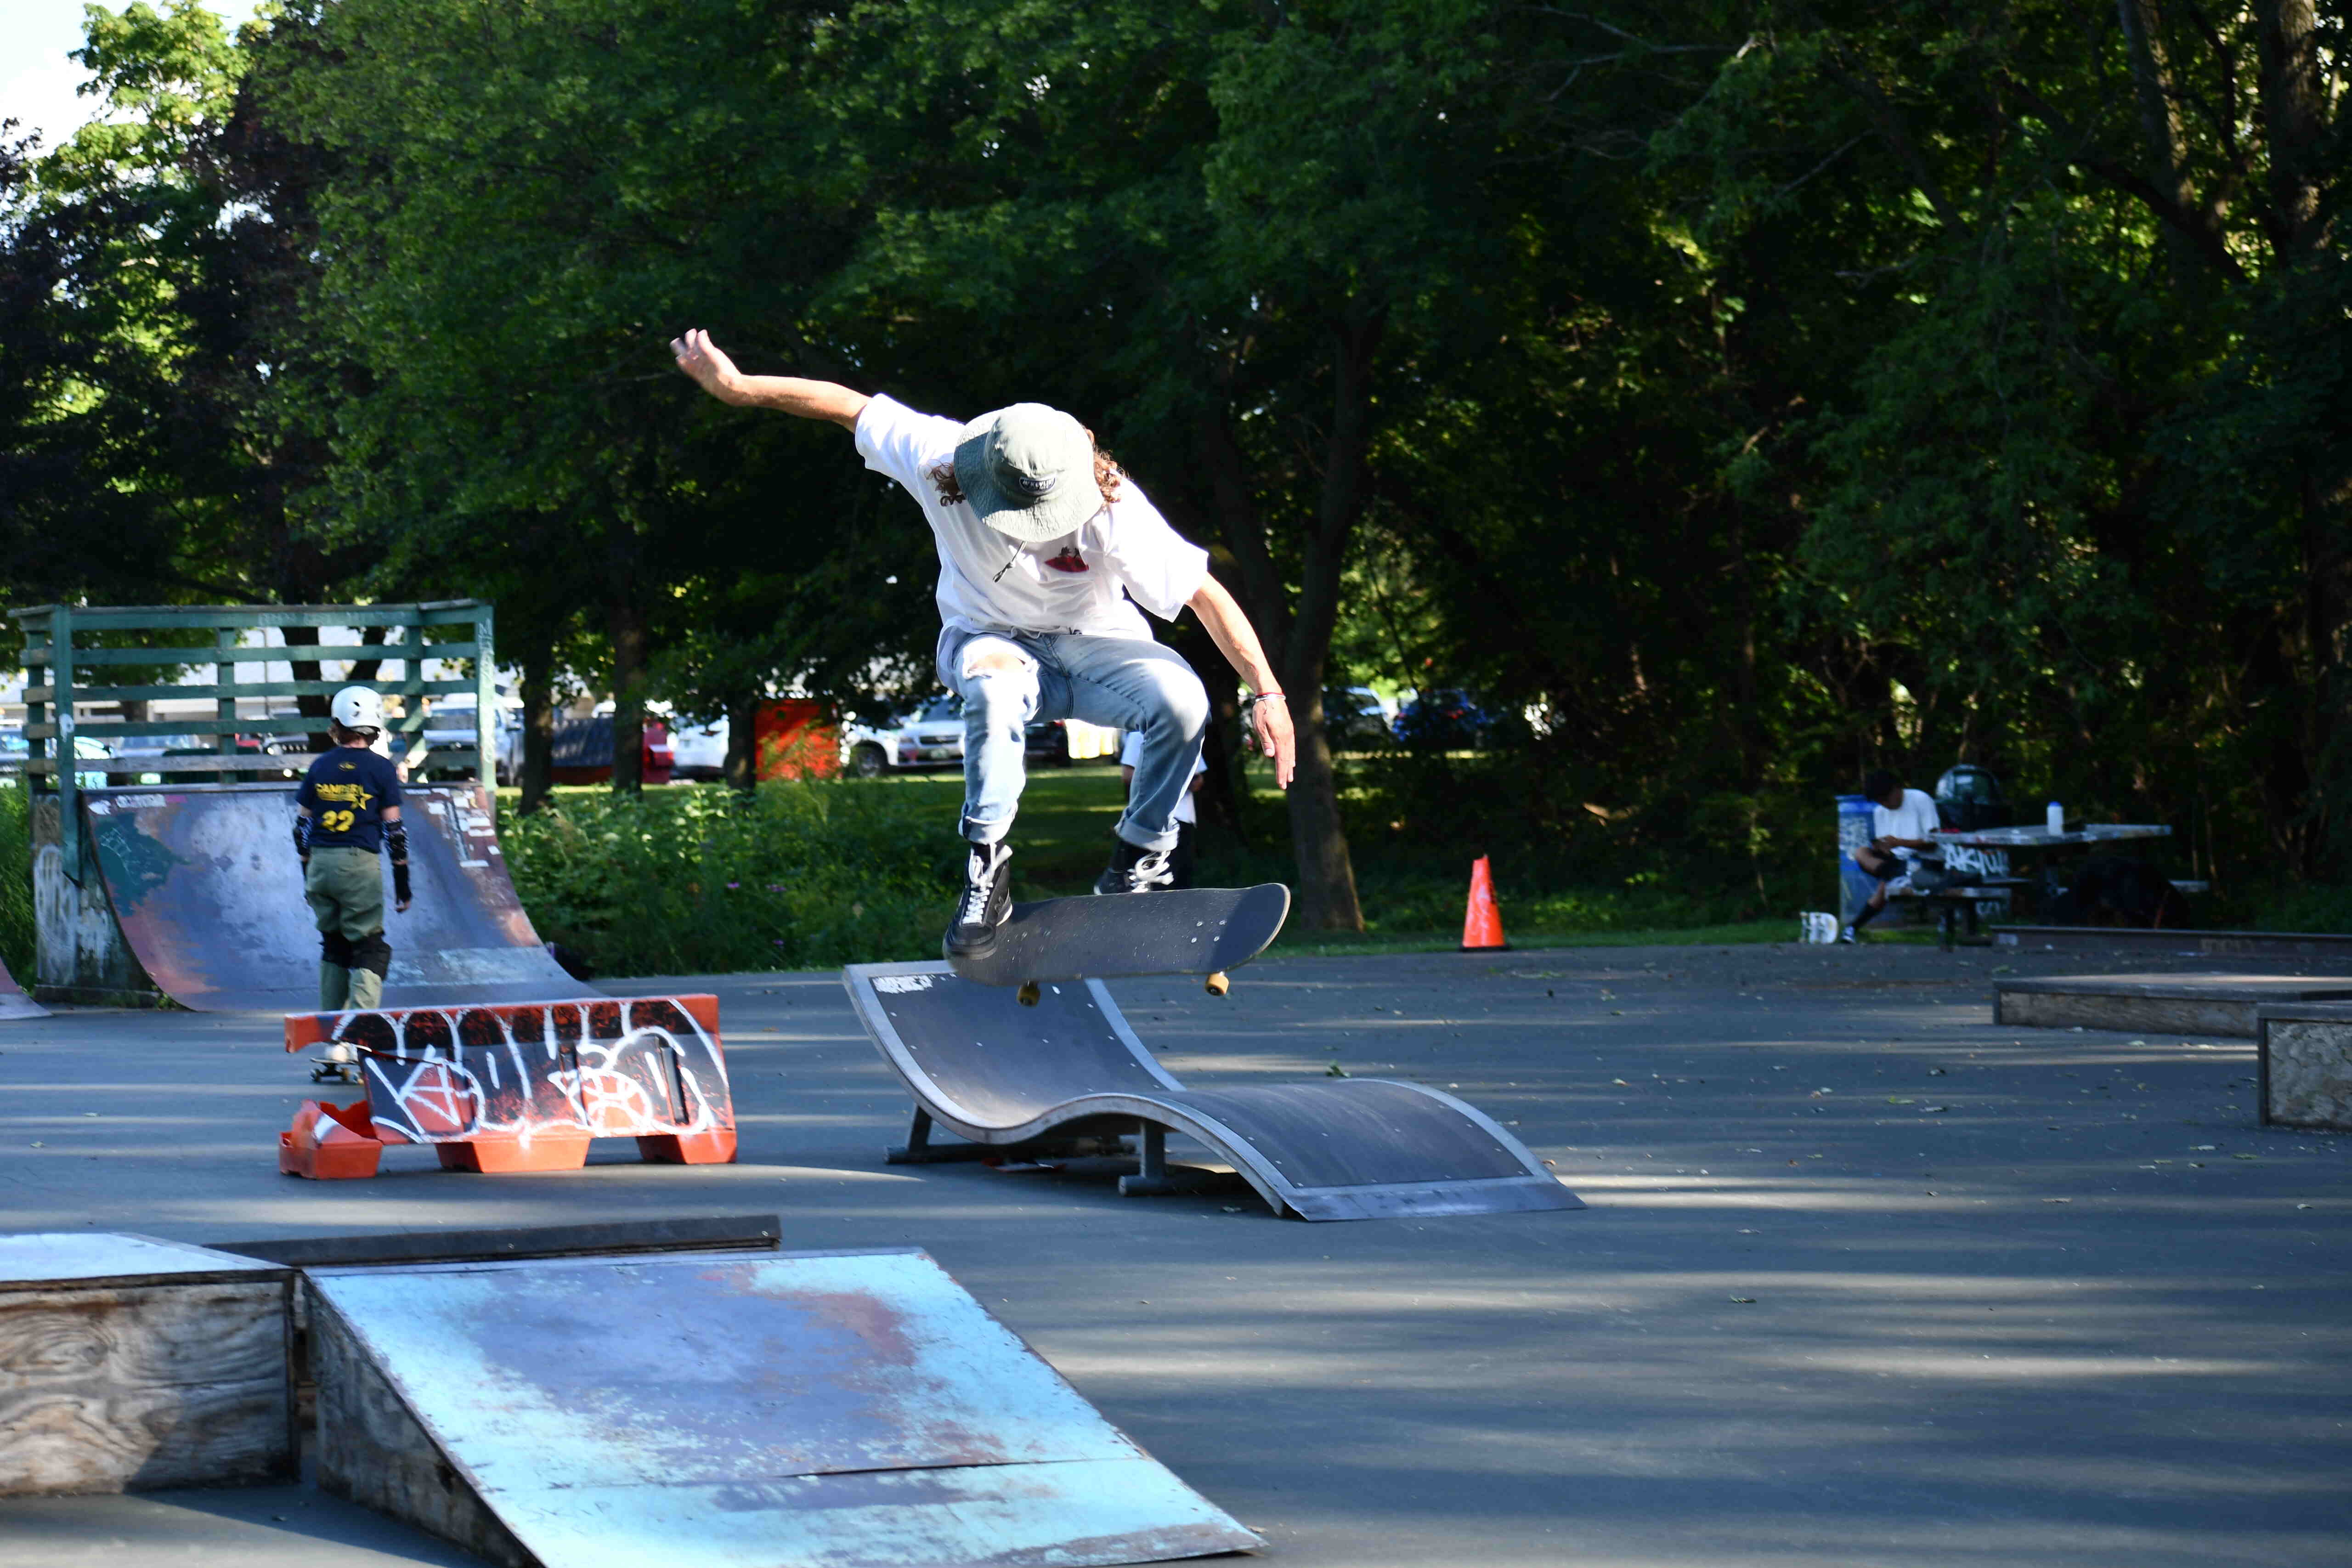 An adult shows a skateboard trick